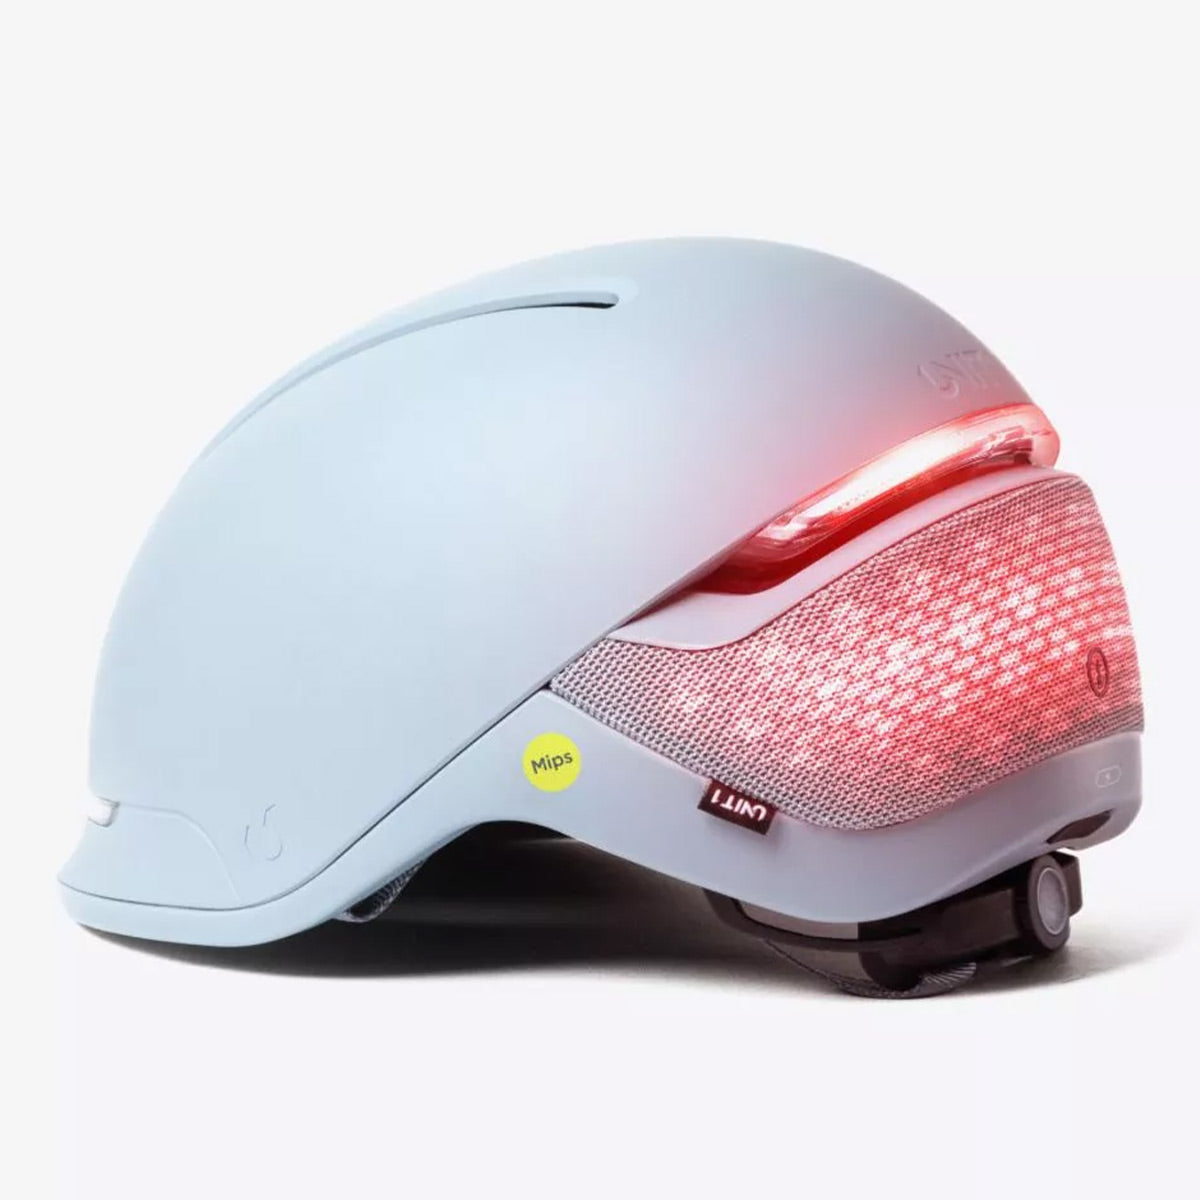 Unit 1 FARO Waterproof Smart Helmet with Mips Impact Safety System & LED Lights - Medium (Stingray)